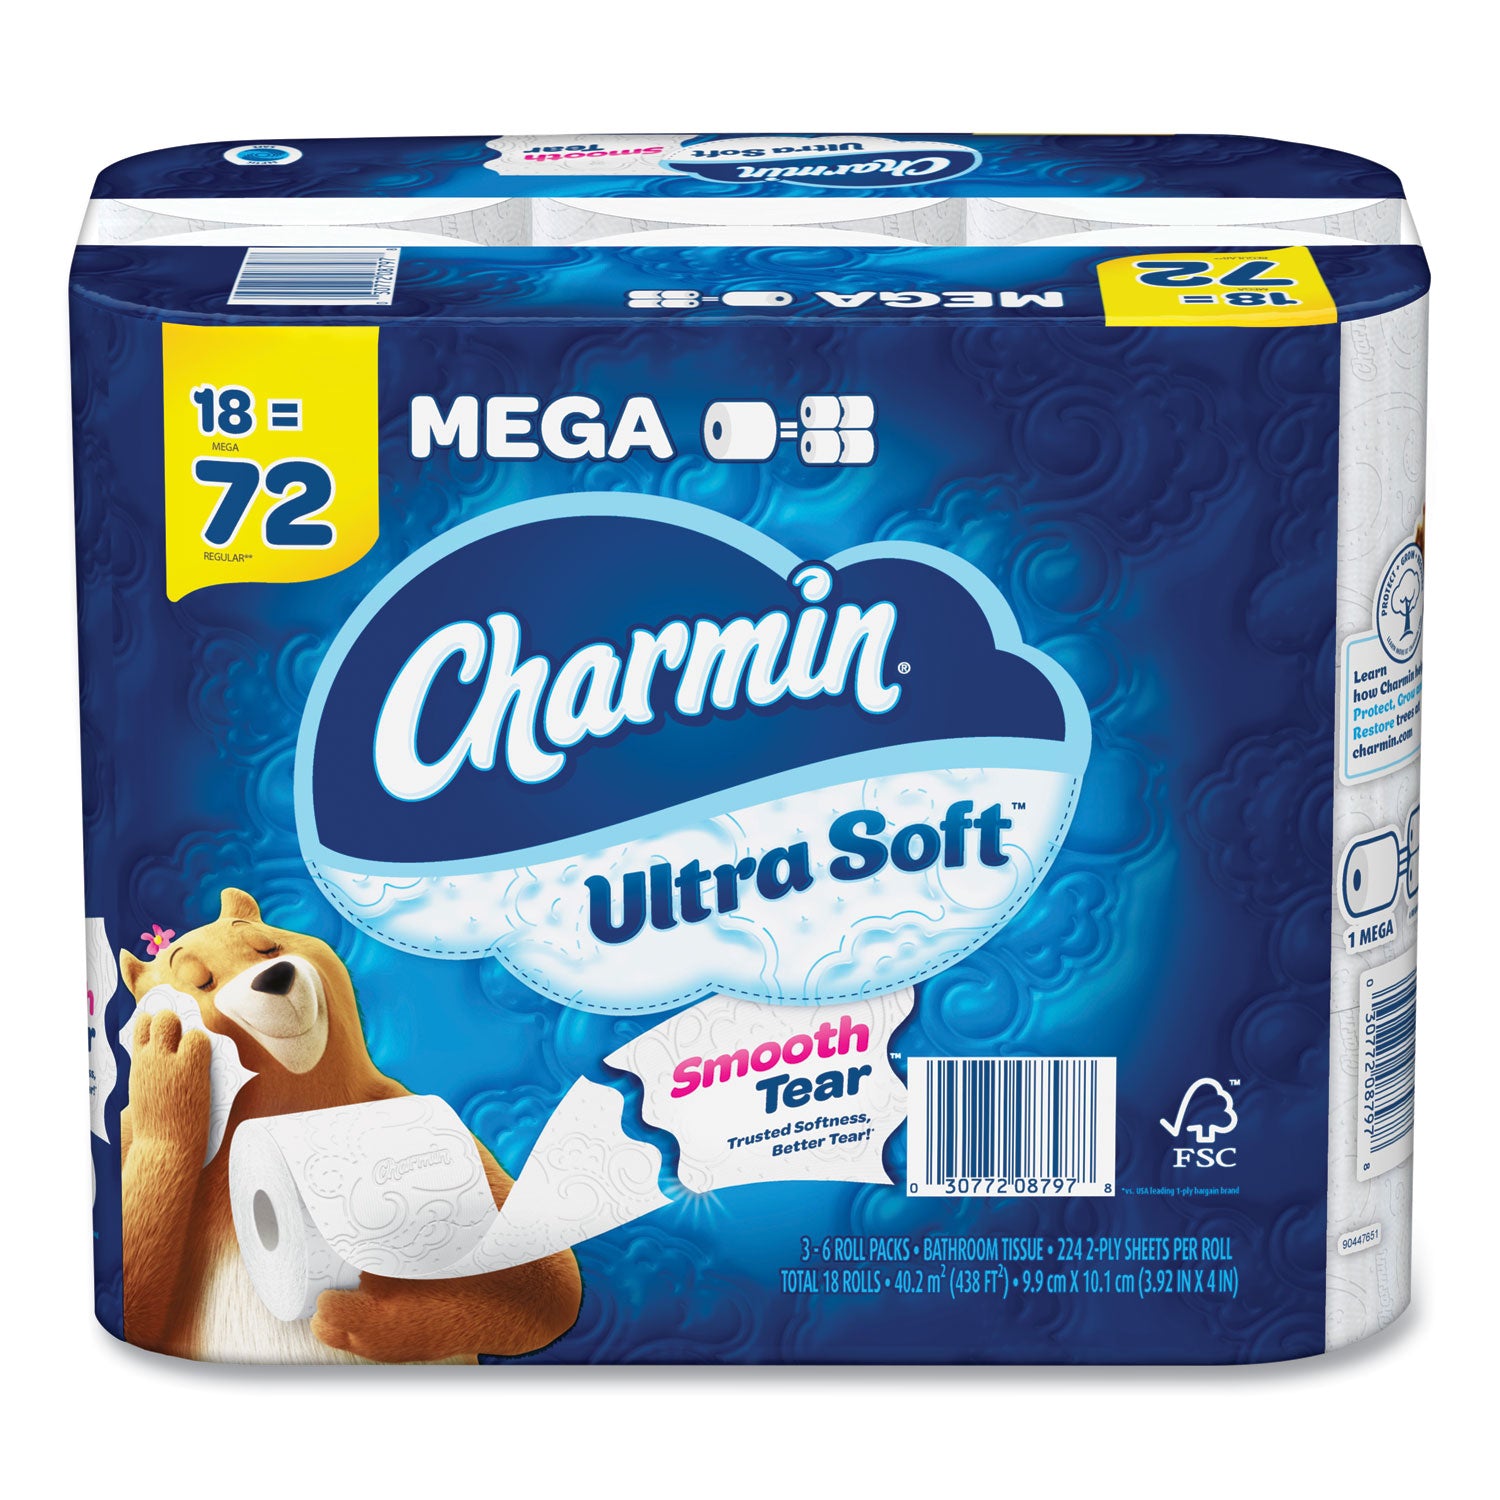 ultra-soft-bathroom-tissue-mega-roll-septic-safe-2-ply-white-224-sheets-roll-18-rolls-carton_pgc08797 - 1